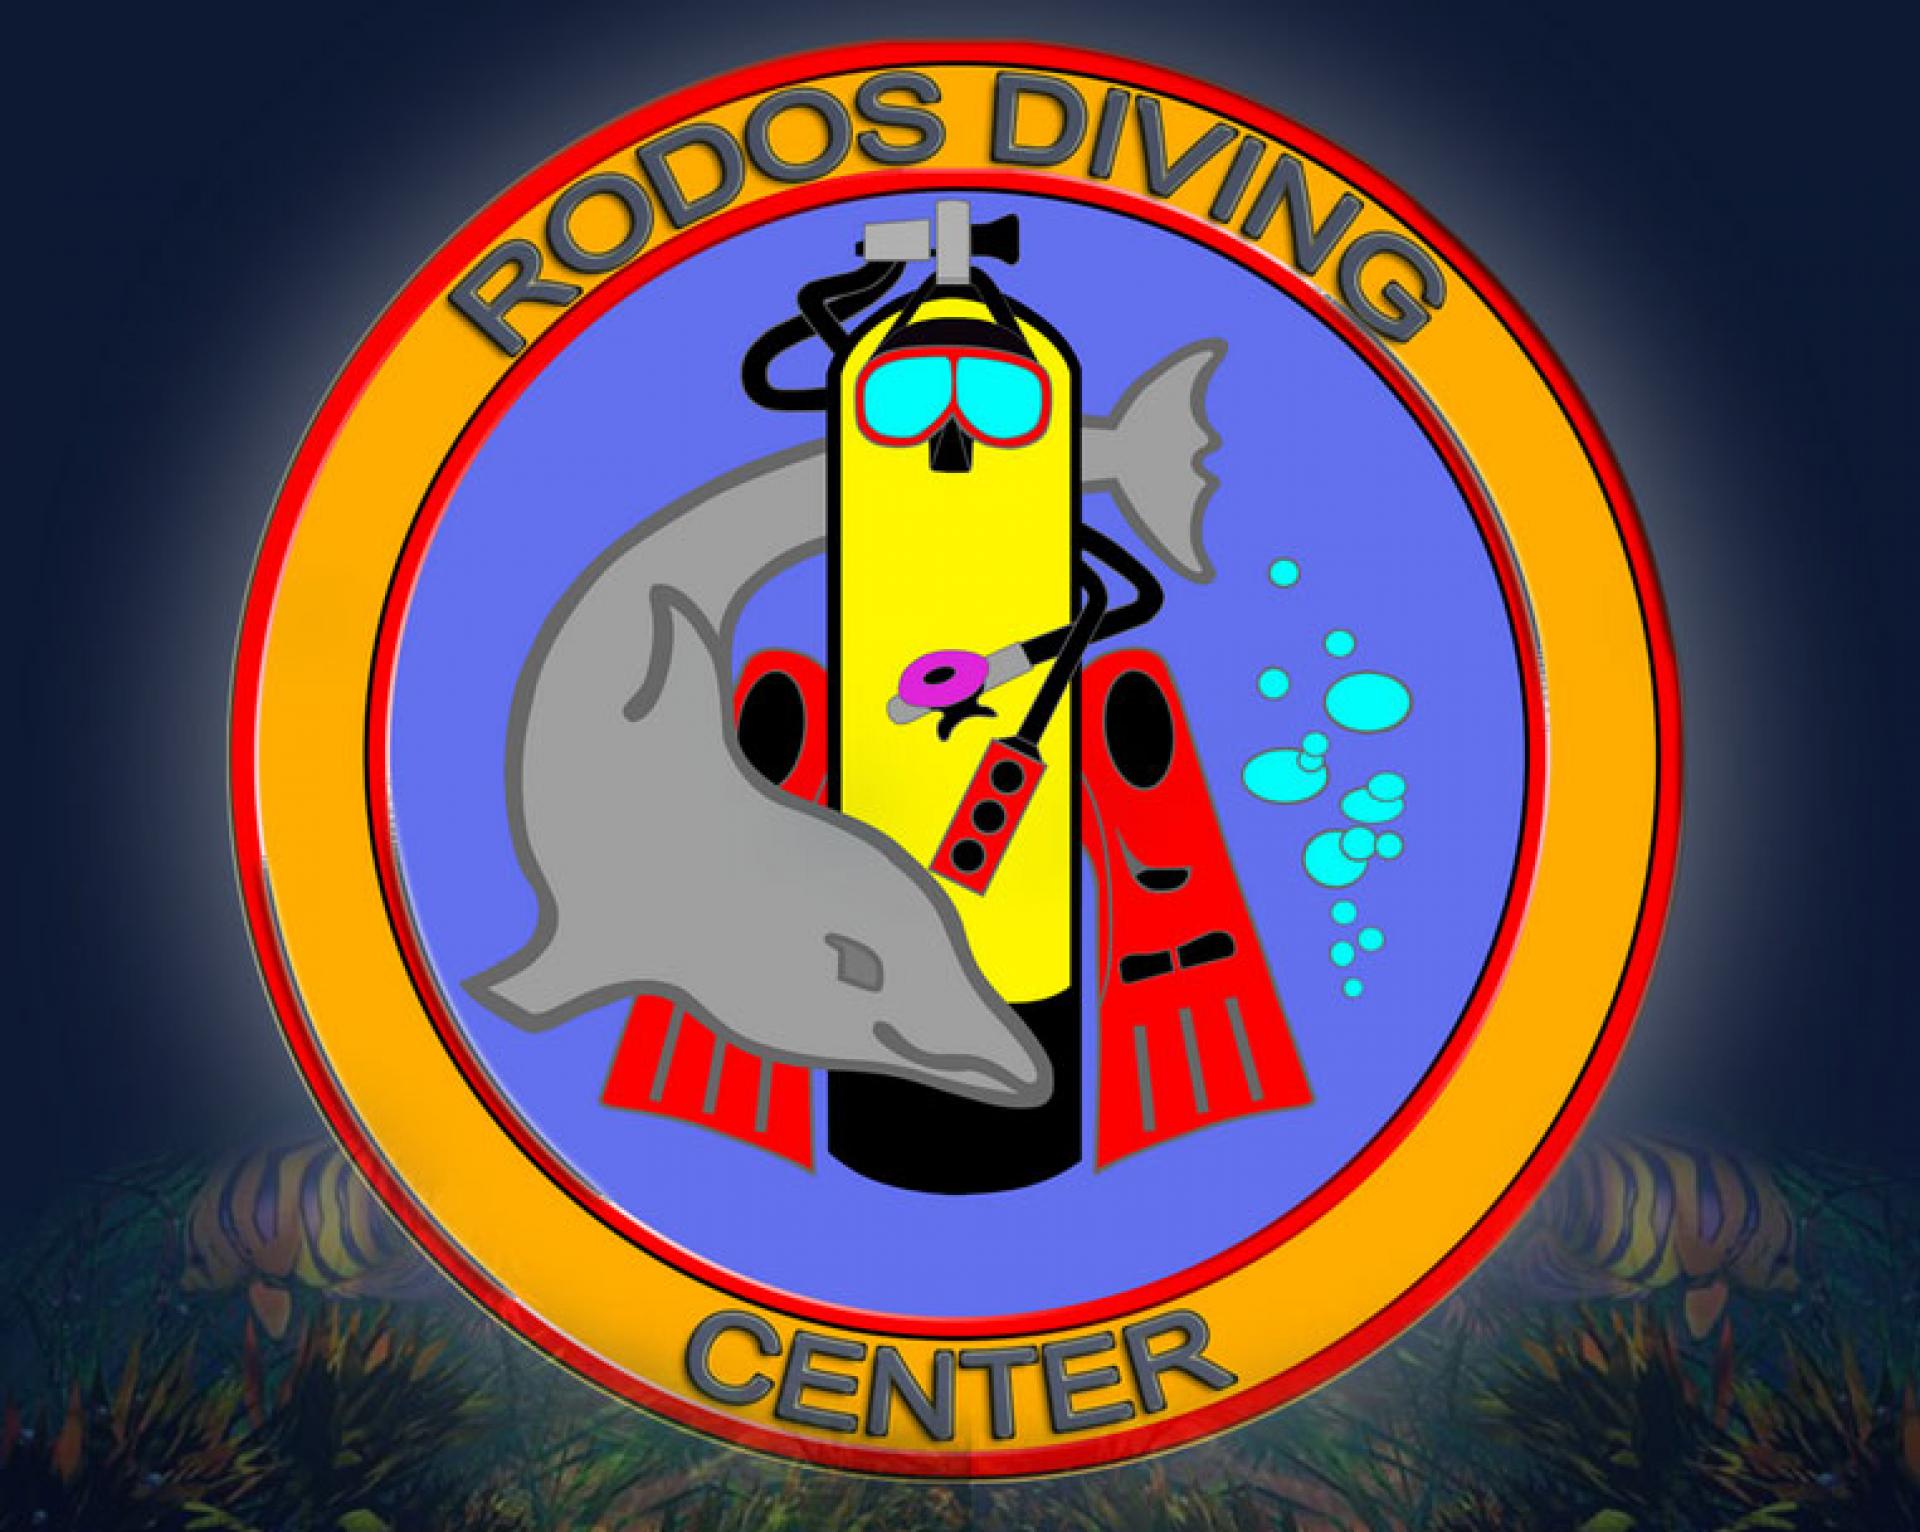 Rodos Diving